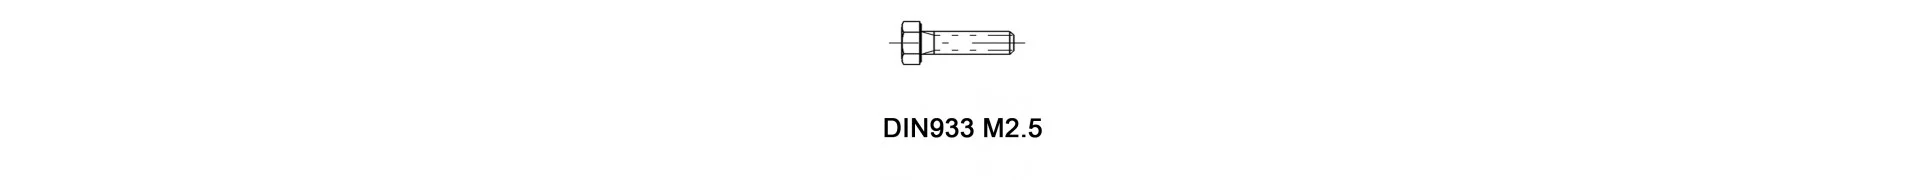 DIN933 M2.5